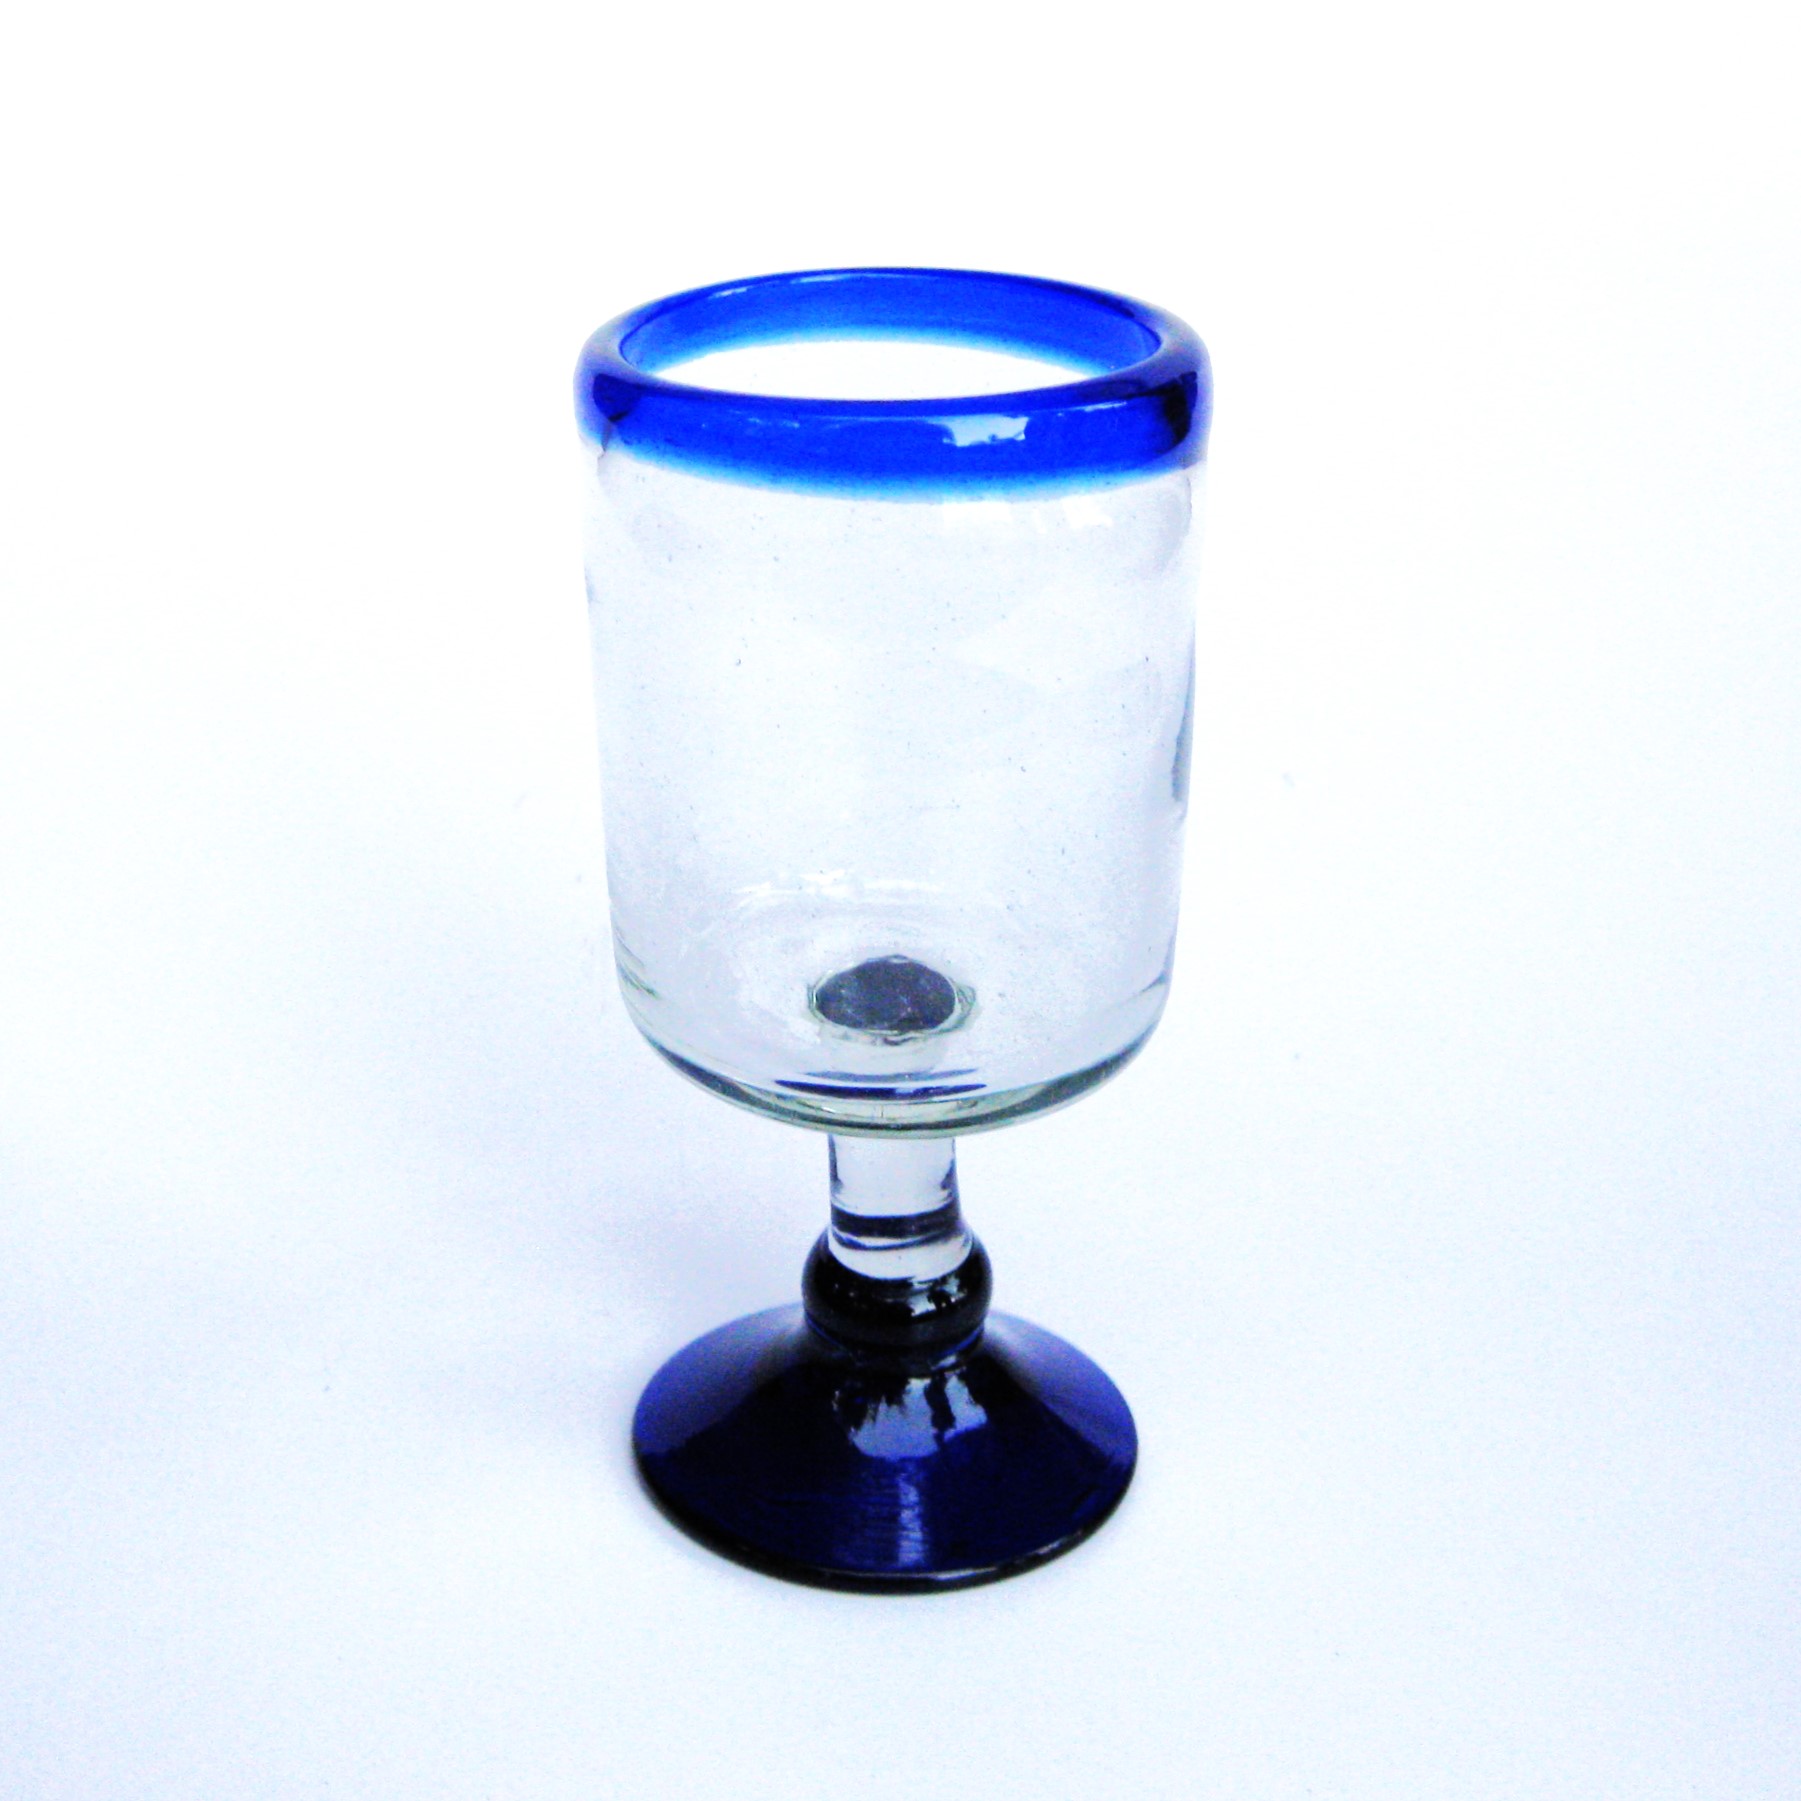 Cobalt Blue Rim 8 oz Small Wine Goblets (set of 6)